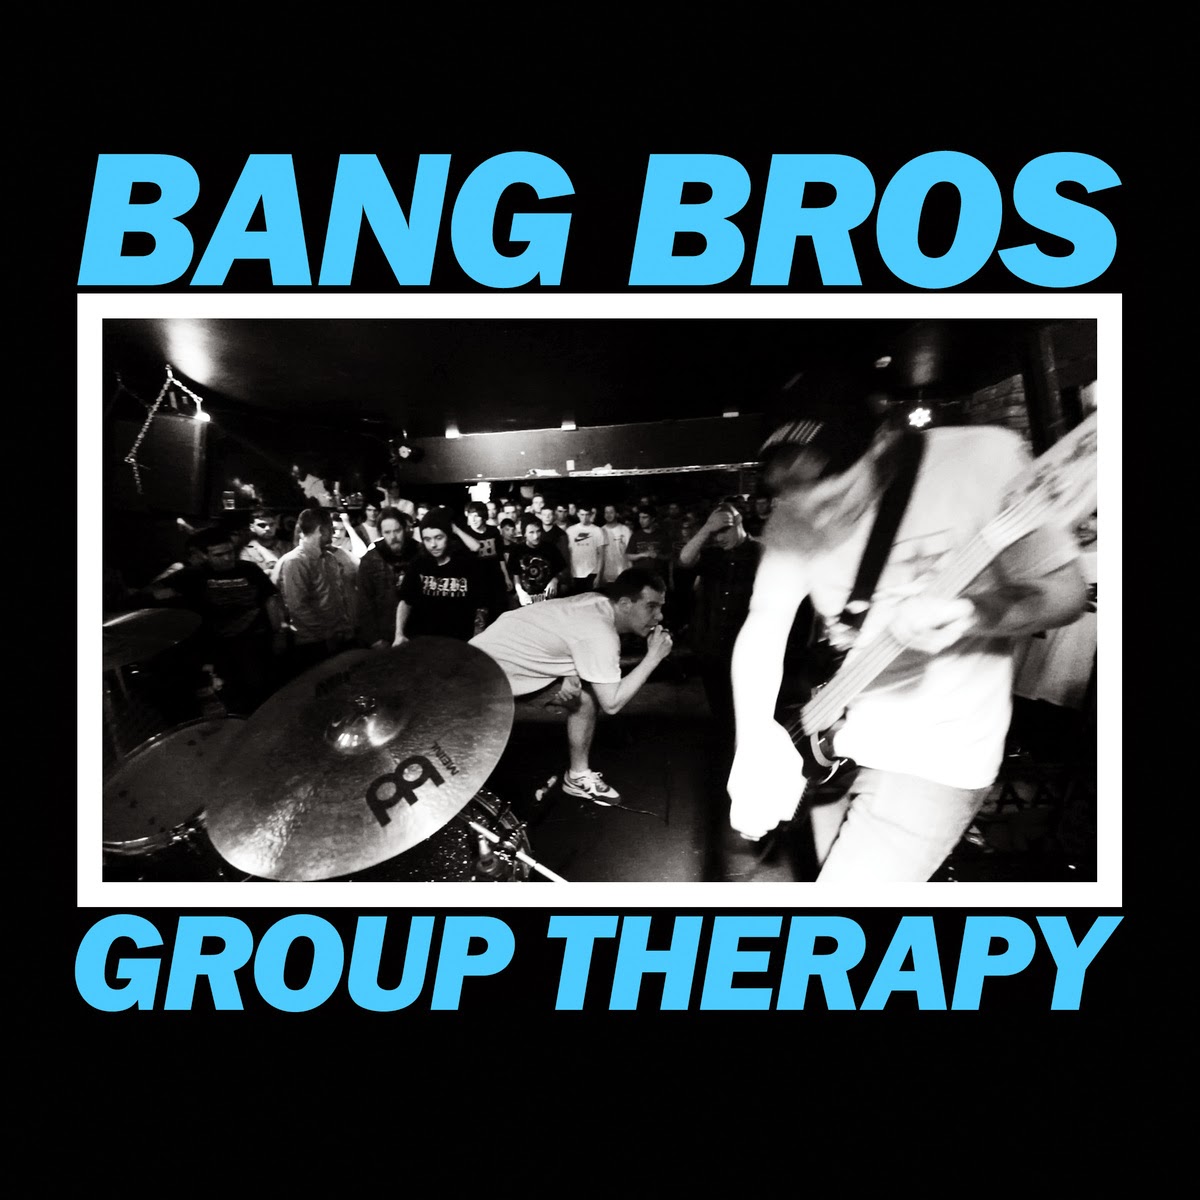 Bang brothers. Therapy группа. Группа Therapy альбомы. БРОС группа.